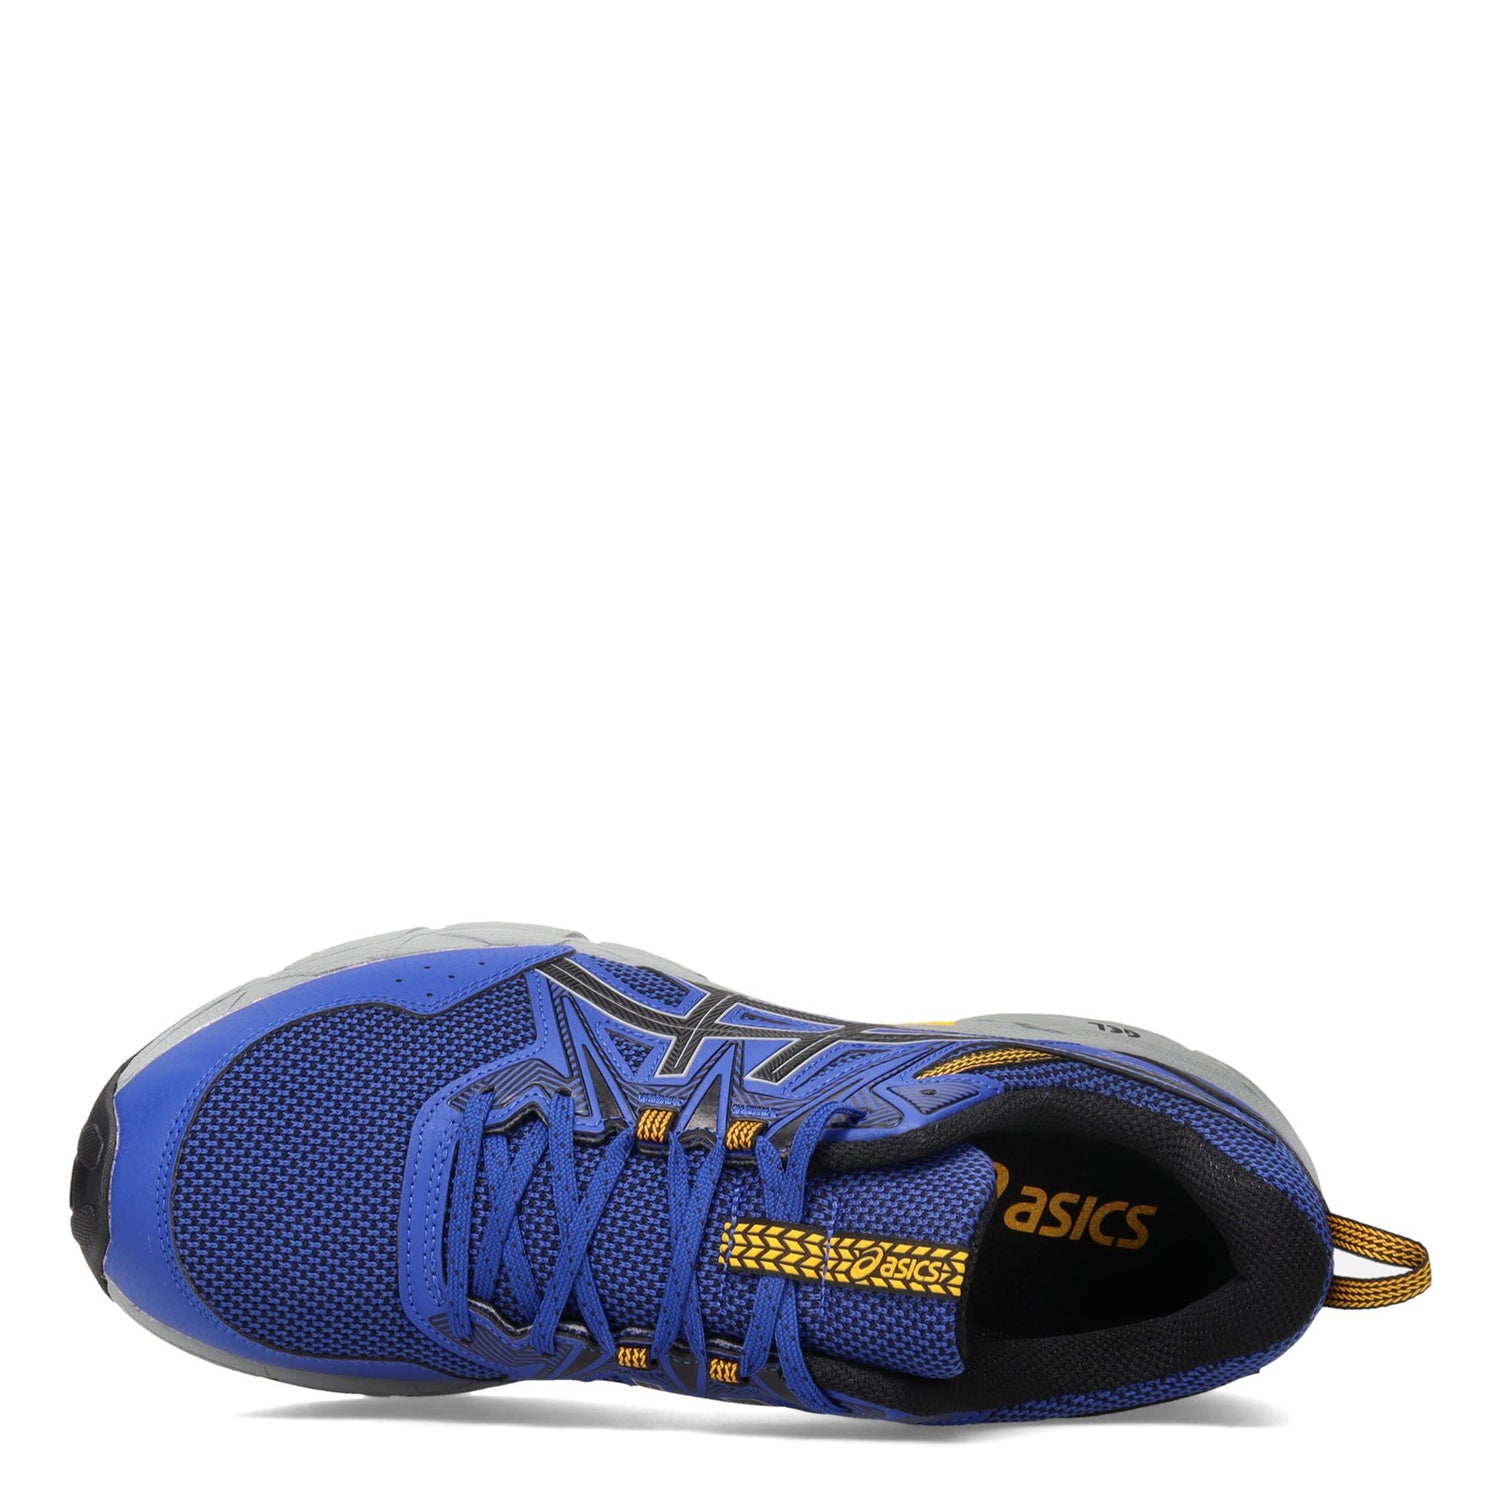 Peltz Shoes  Men's ASICS GEL-Venture 8 Trail Running Shoe BLUE BLACK 1011A824.402